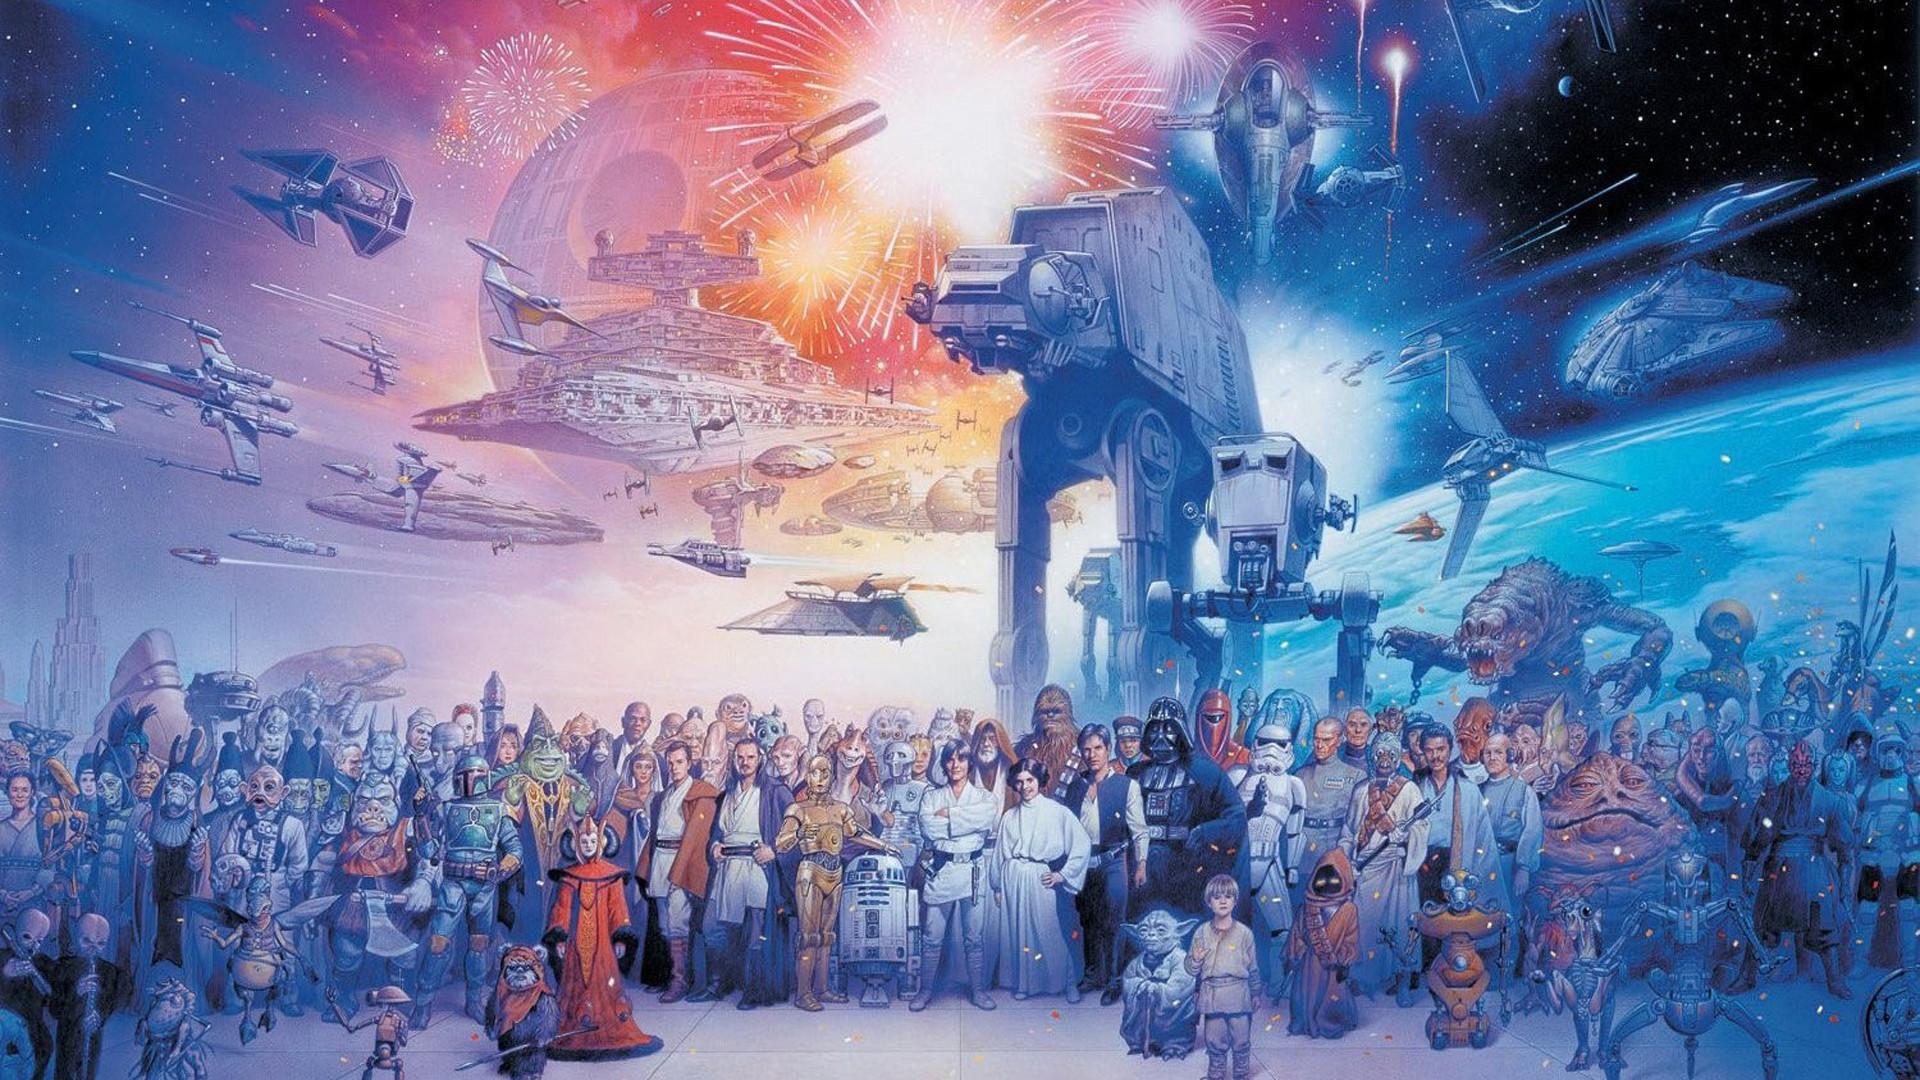 Star Wars Wallpaper